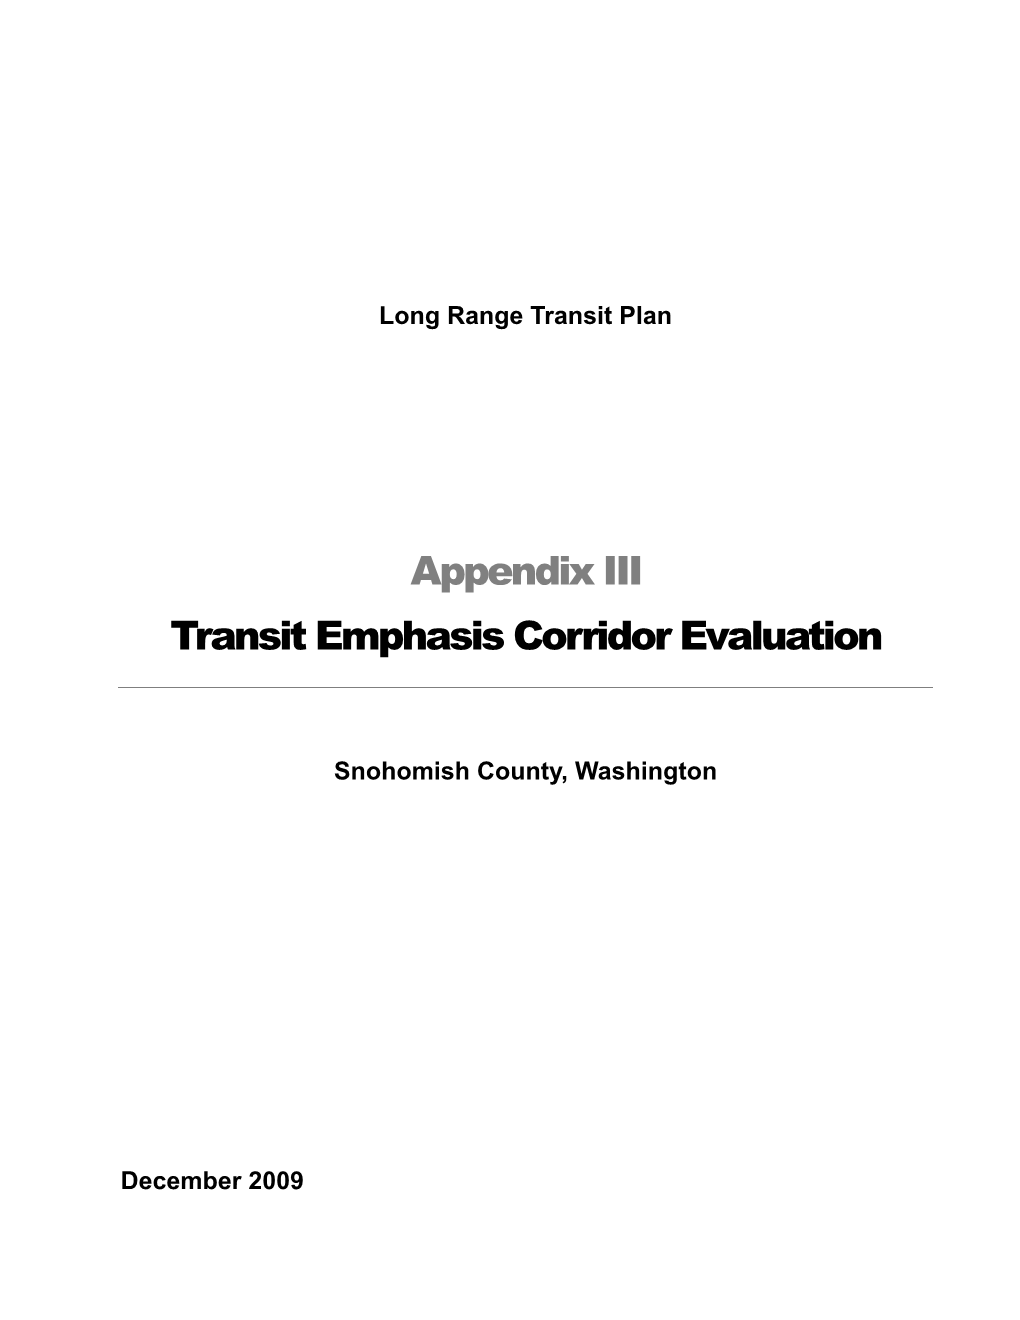 Appendix III Transit Emphasis Corridor Evaluation